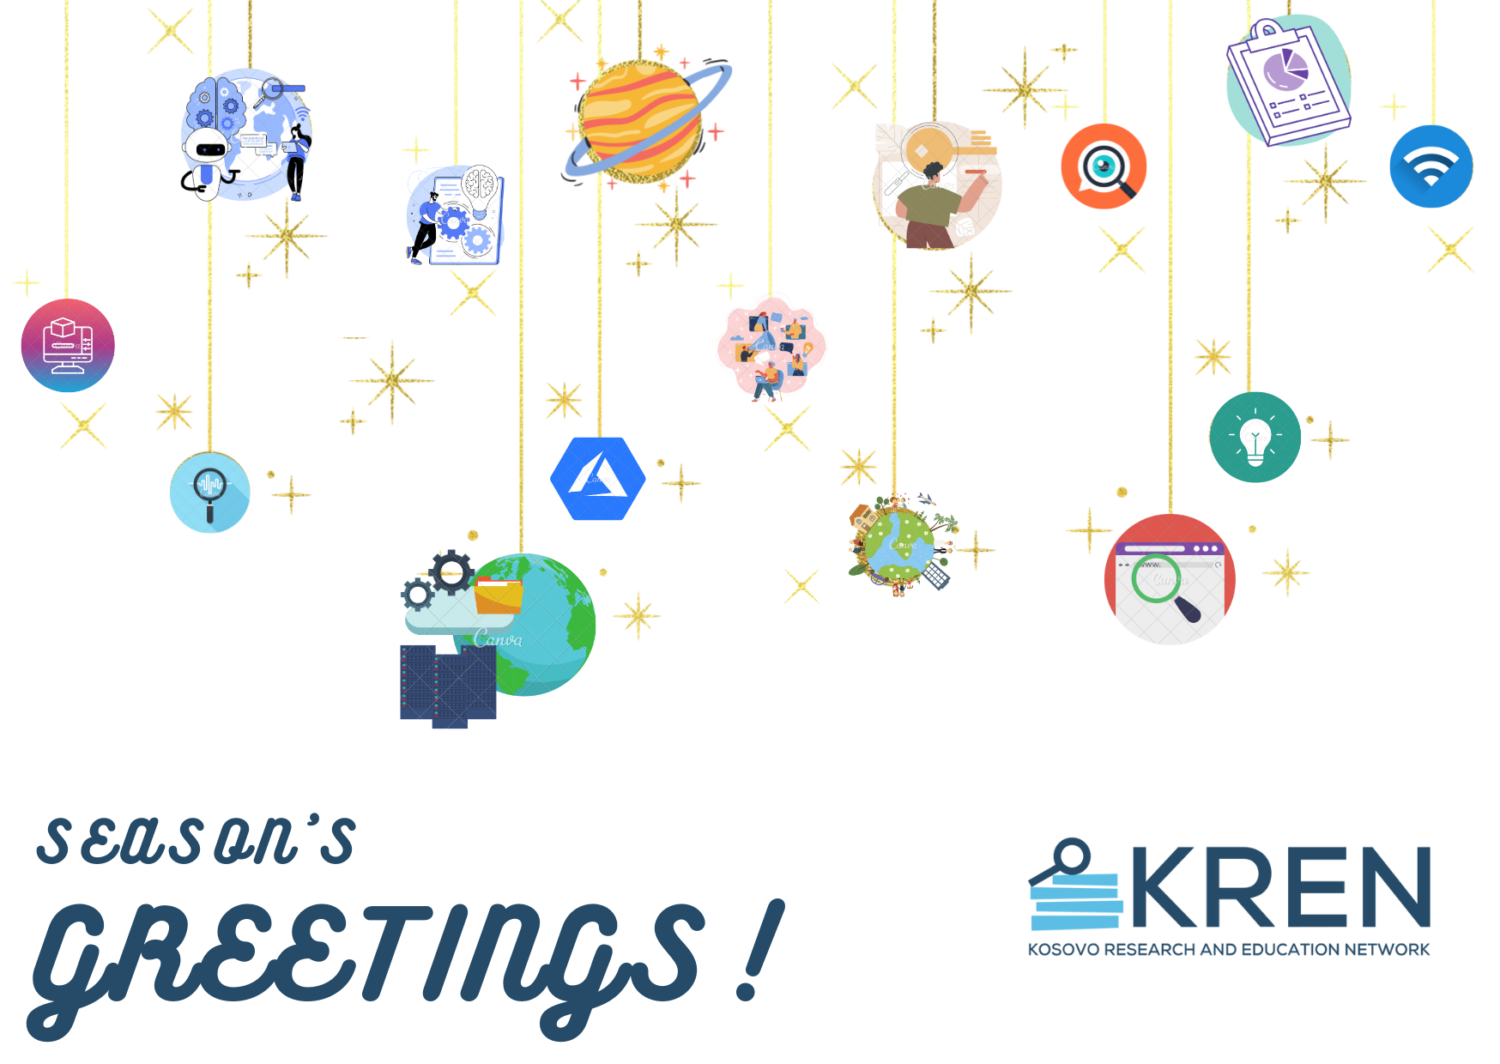 Season’s greeting from KREN staff!